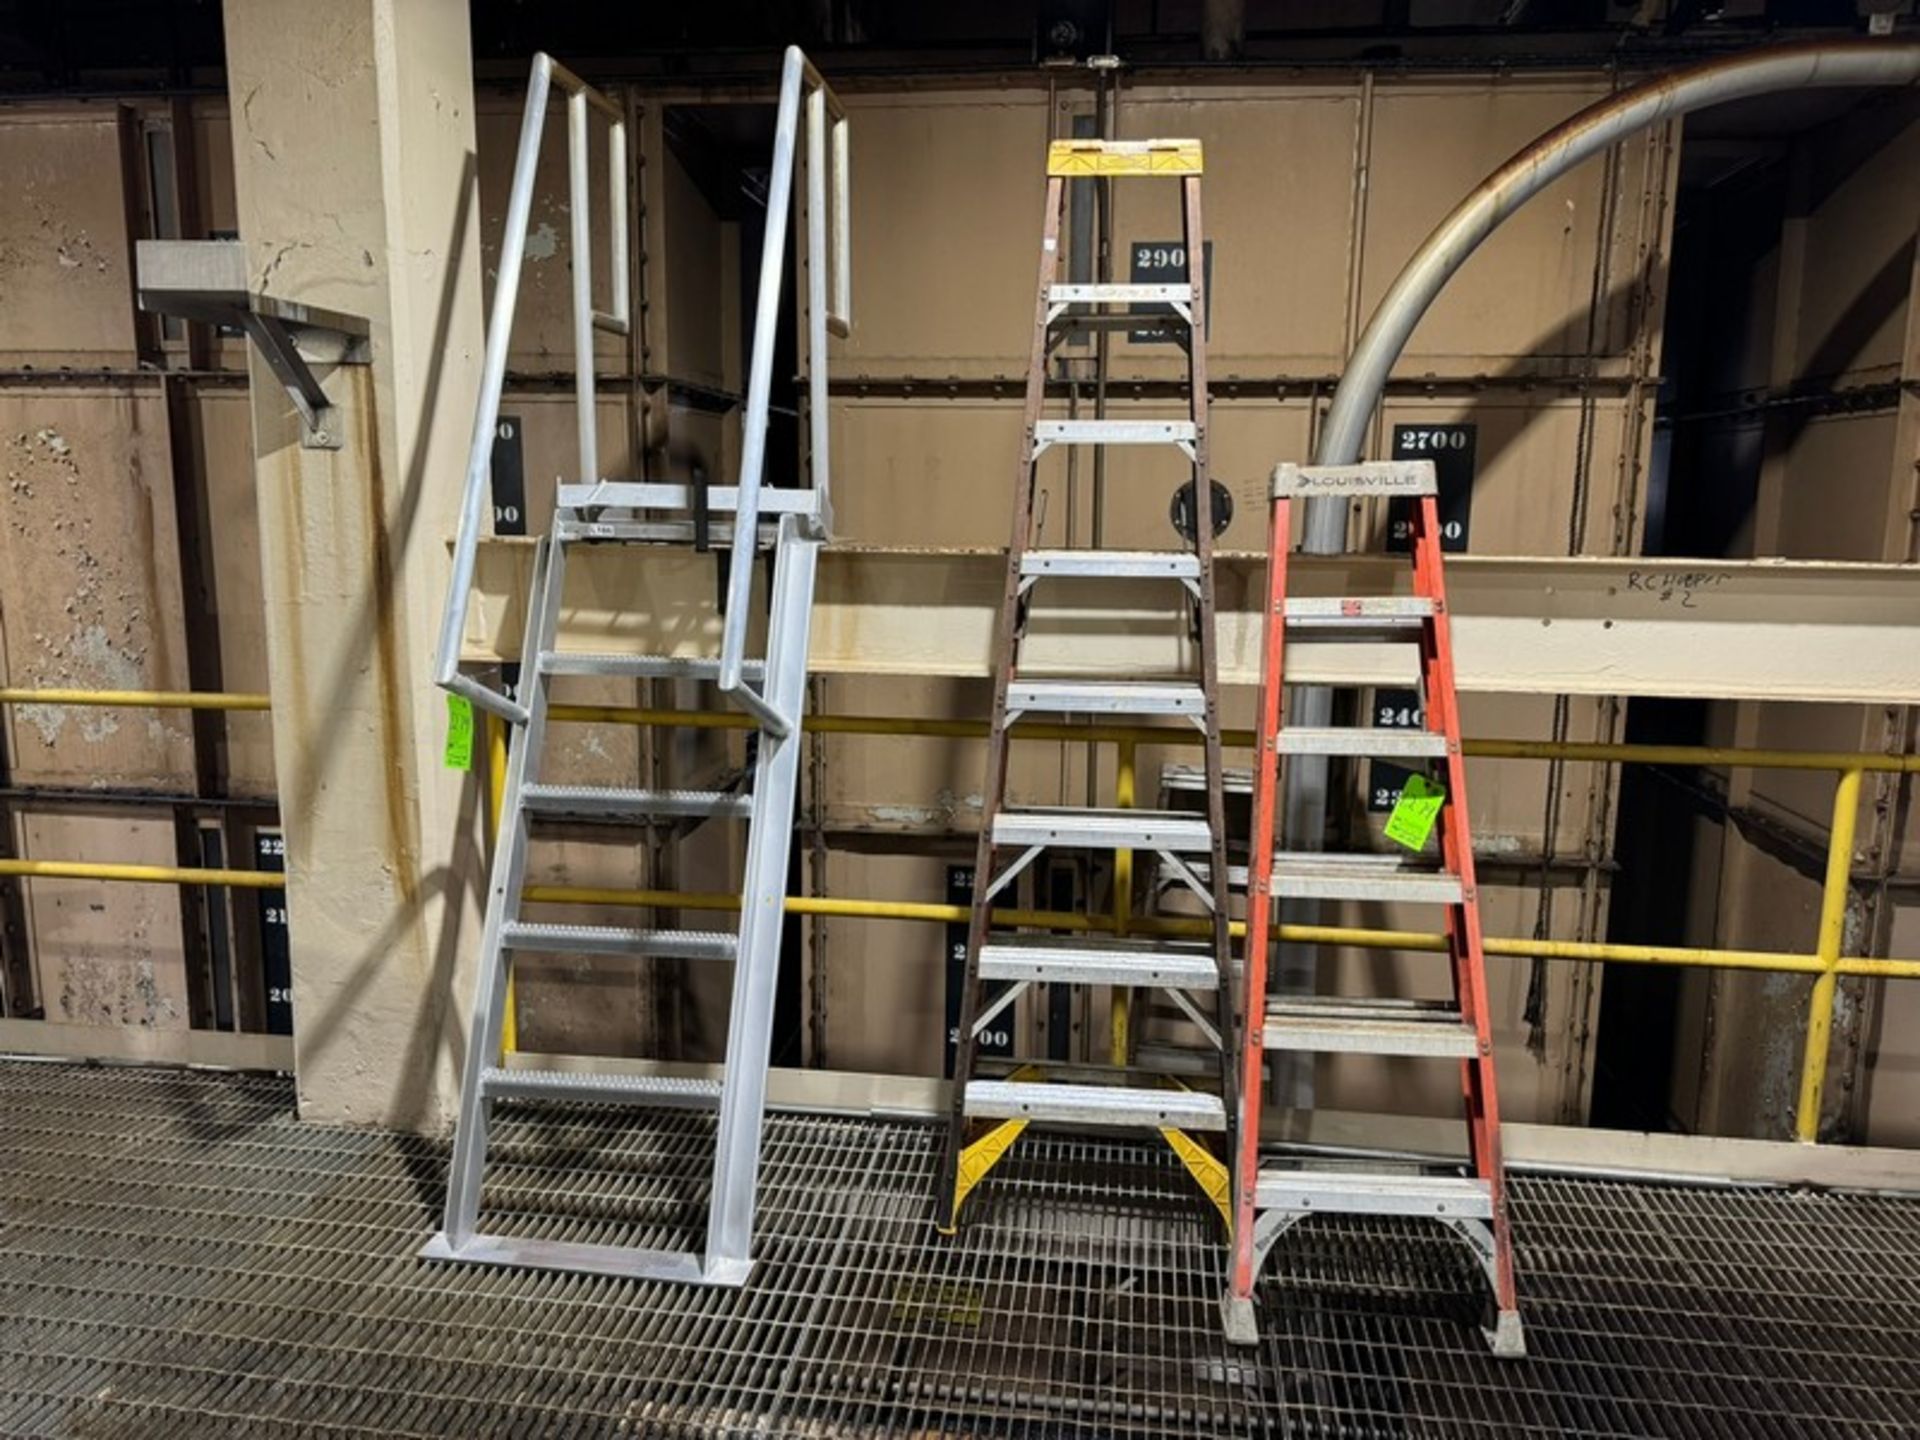 1-Louisville 6 ft. A-Frame Ladder, 1-Werner A-Frame Ladder, with 1- Railing Ladder (LOCATED IN